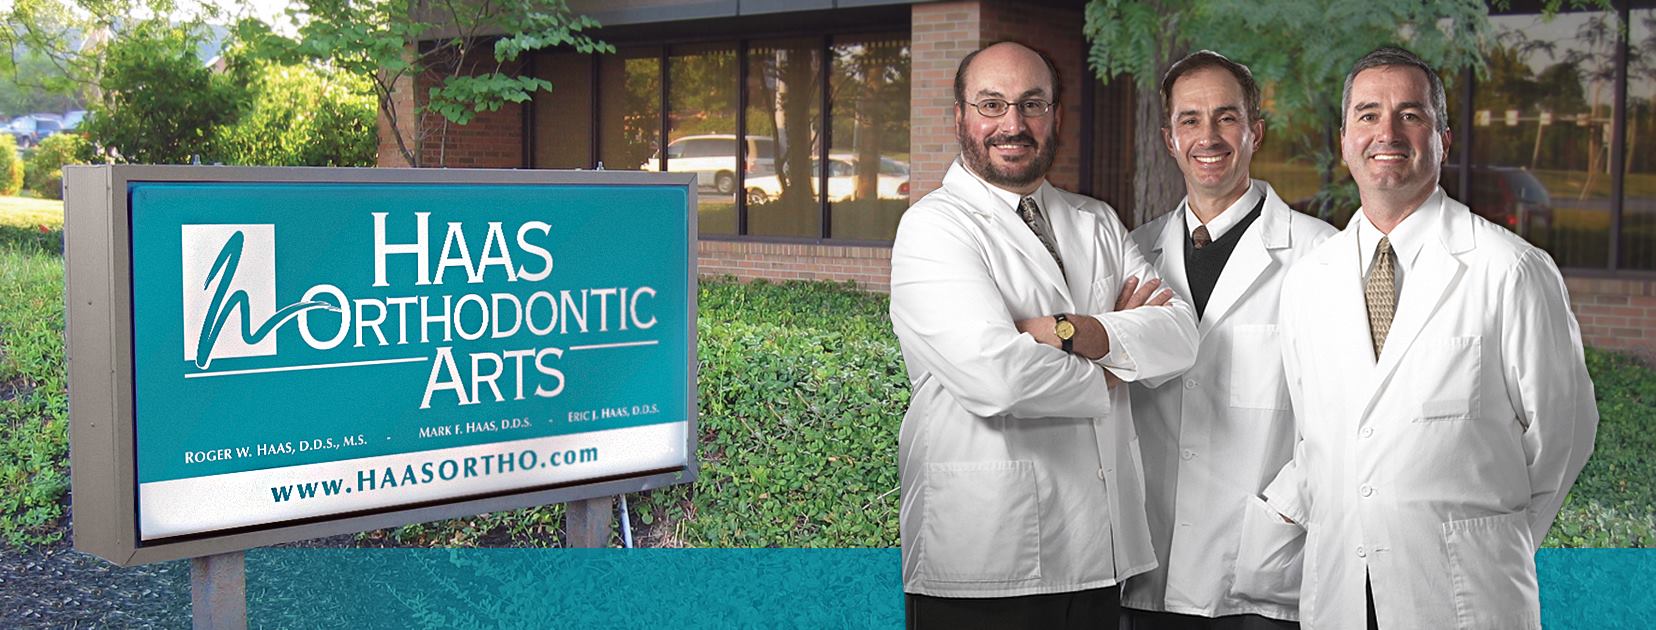 Haas Orthodontic Arts